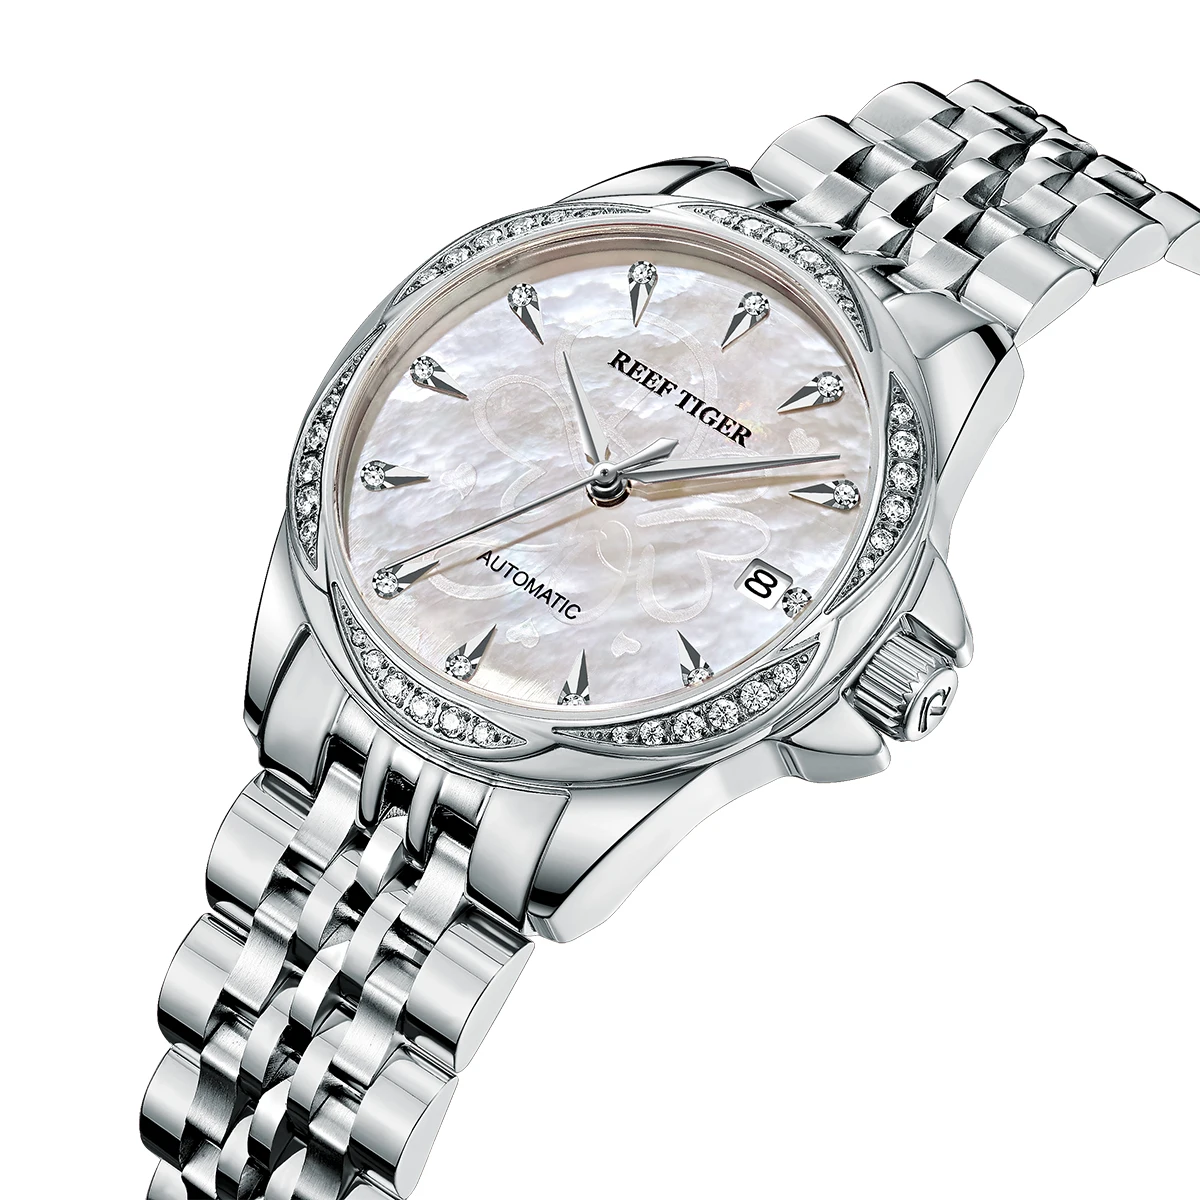 Reef Tiger/RT Sapphire Crystal Women Mechanical Watch Luxury Brand Women Automatic Watch Diamond Dress Watch RGA1583-2 enlarge